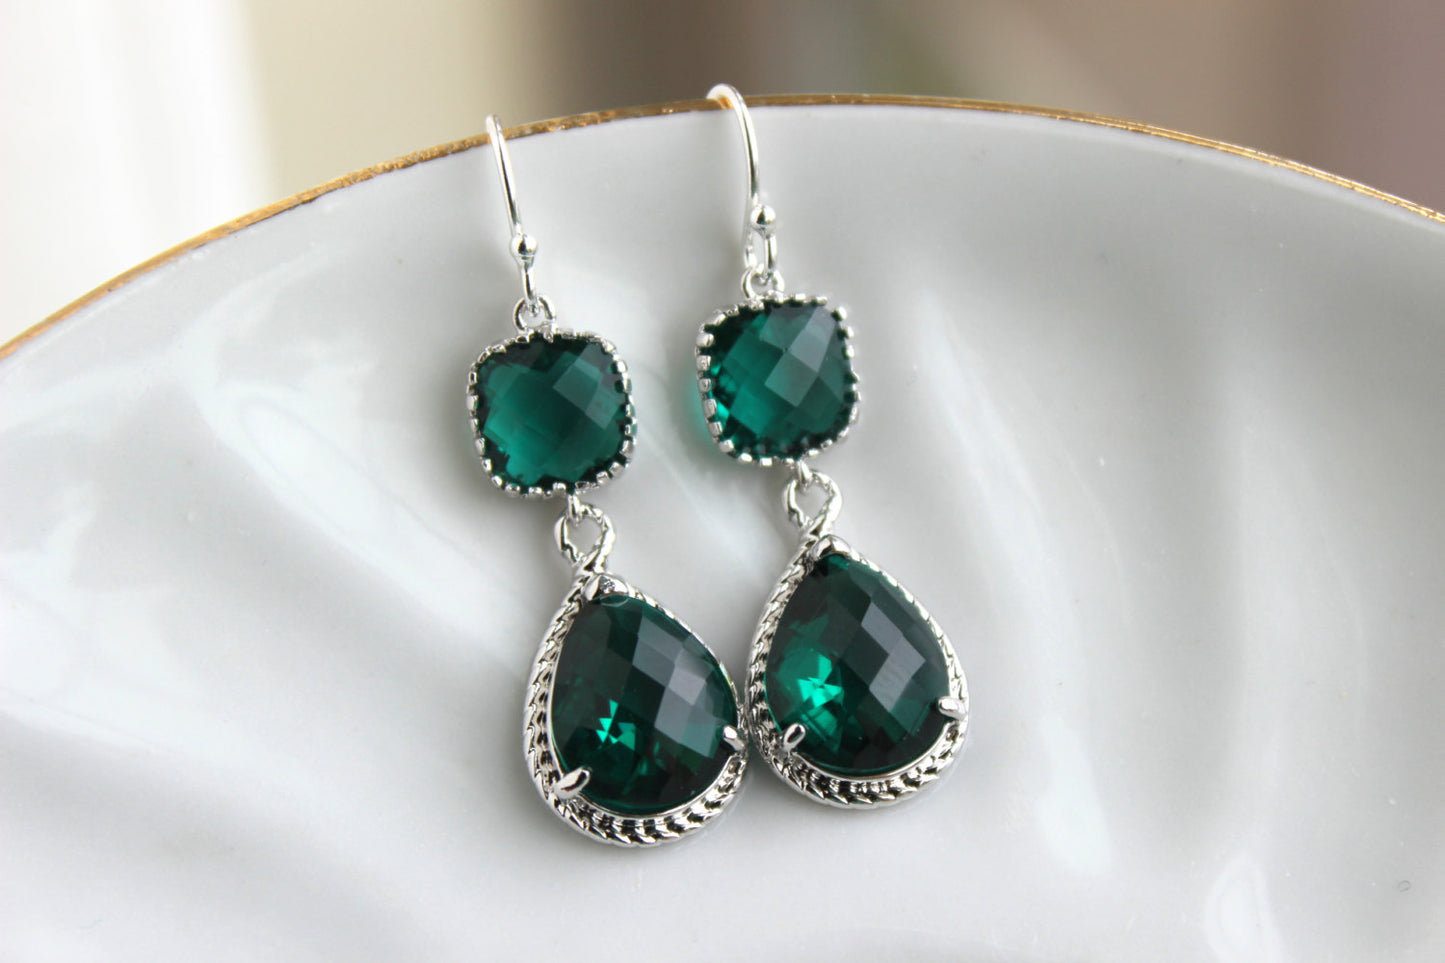 Silver Emerald Green Earrings Two Tiered - Emerald Wedding Jewelry - Dark Green Bridesmaid Earrings Gift Bridal Jewelry - Gift Under 35